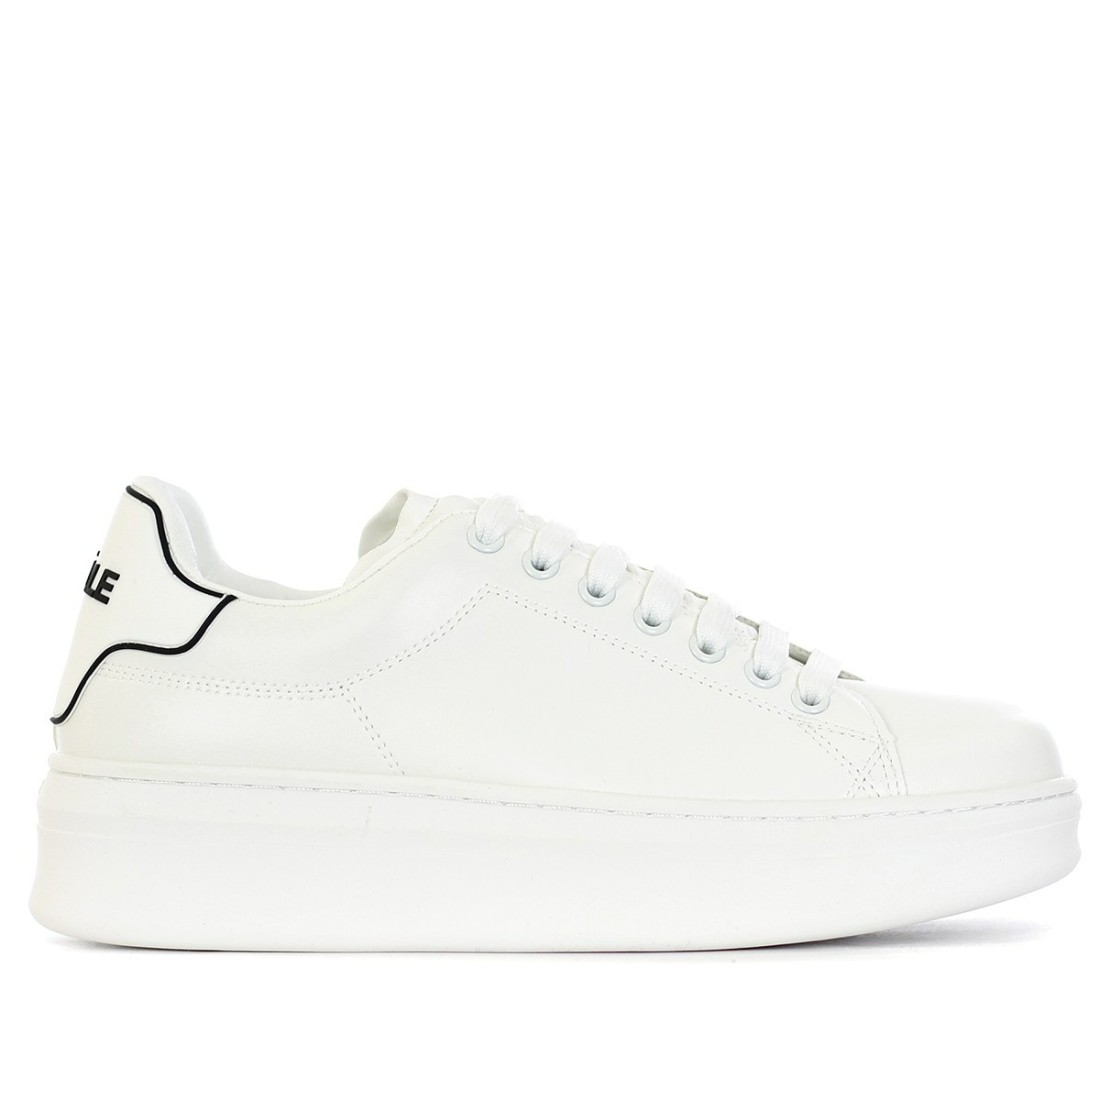 Image of GAELLE PARIS - Sneakers - Colore: Bianco,Taglia: 4